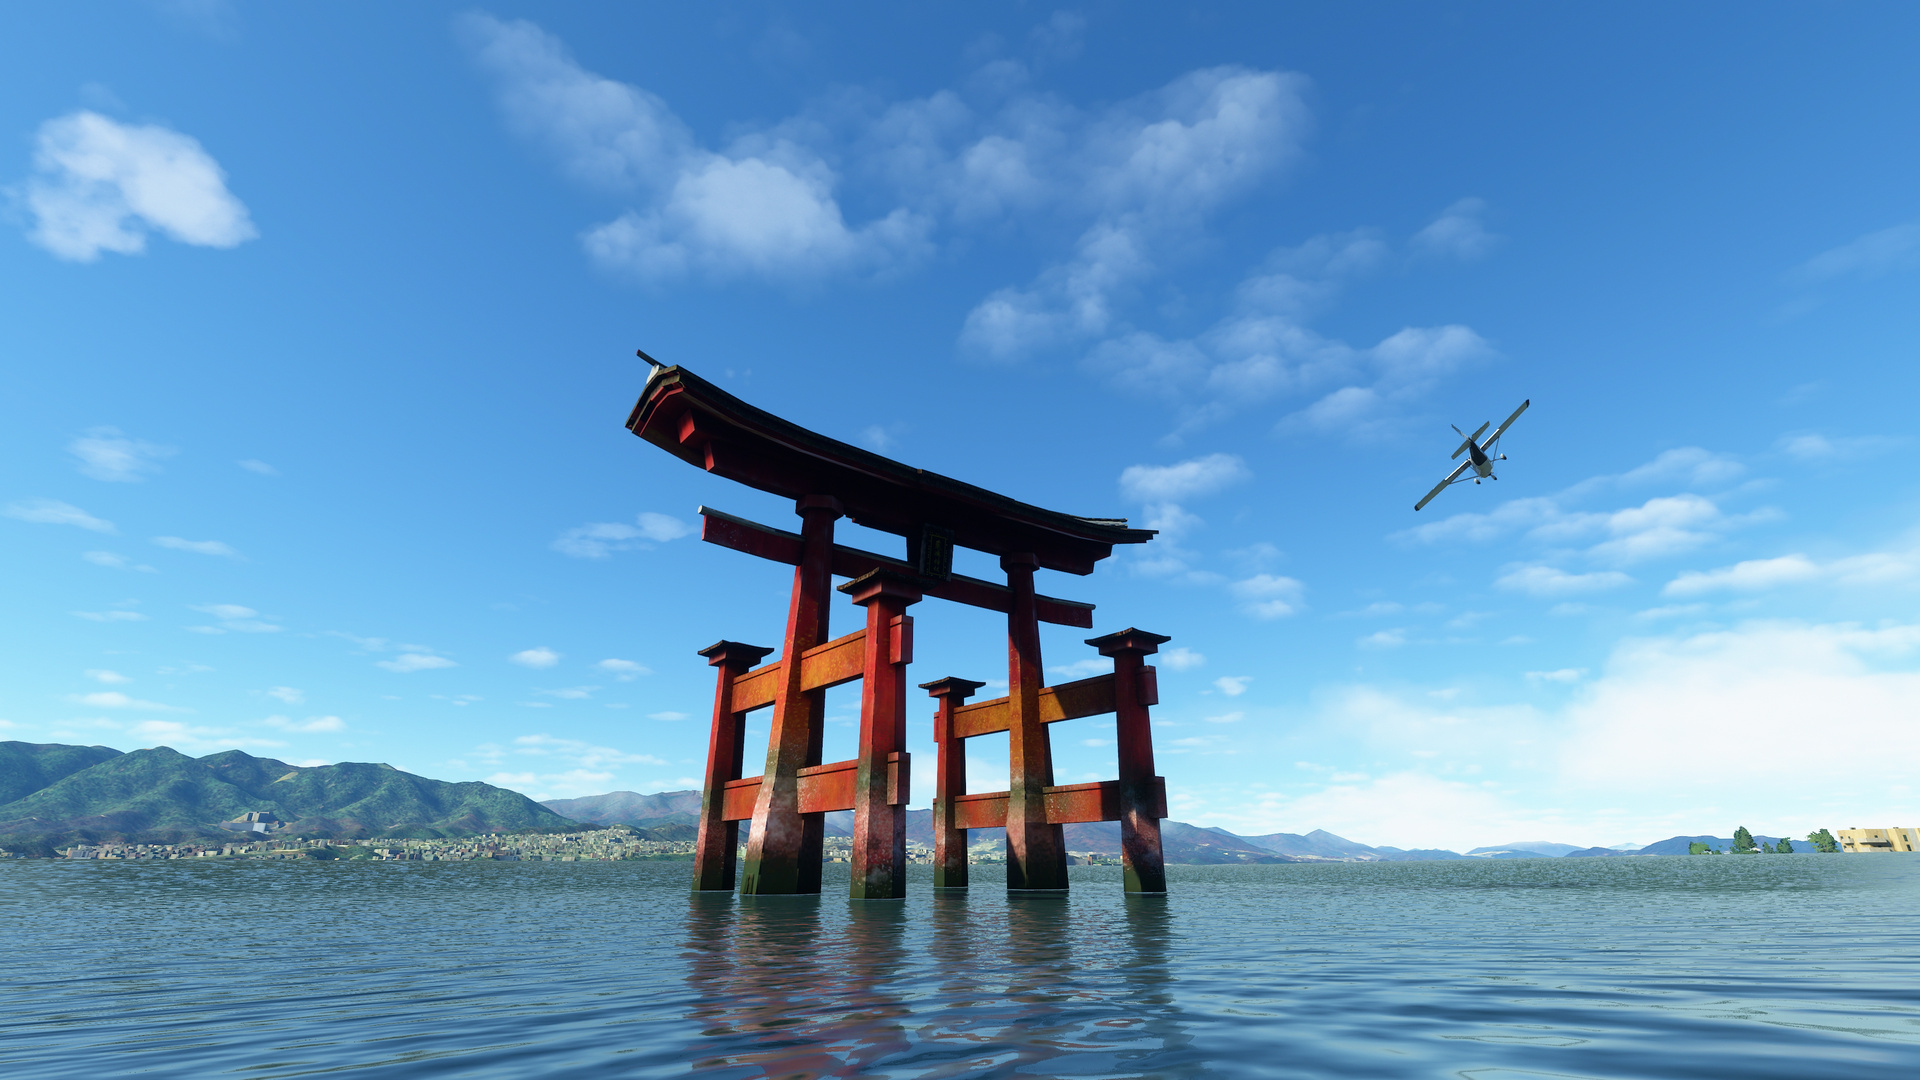 Msフライトシミュレーター日本アップデート配信開始 東京から姫路城 軍艦島まで追加 再現度向上 Engadget 日本版